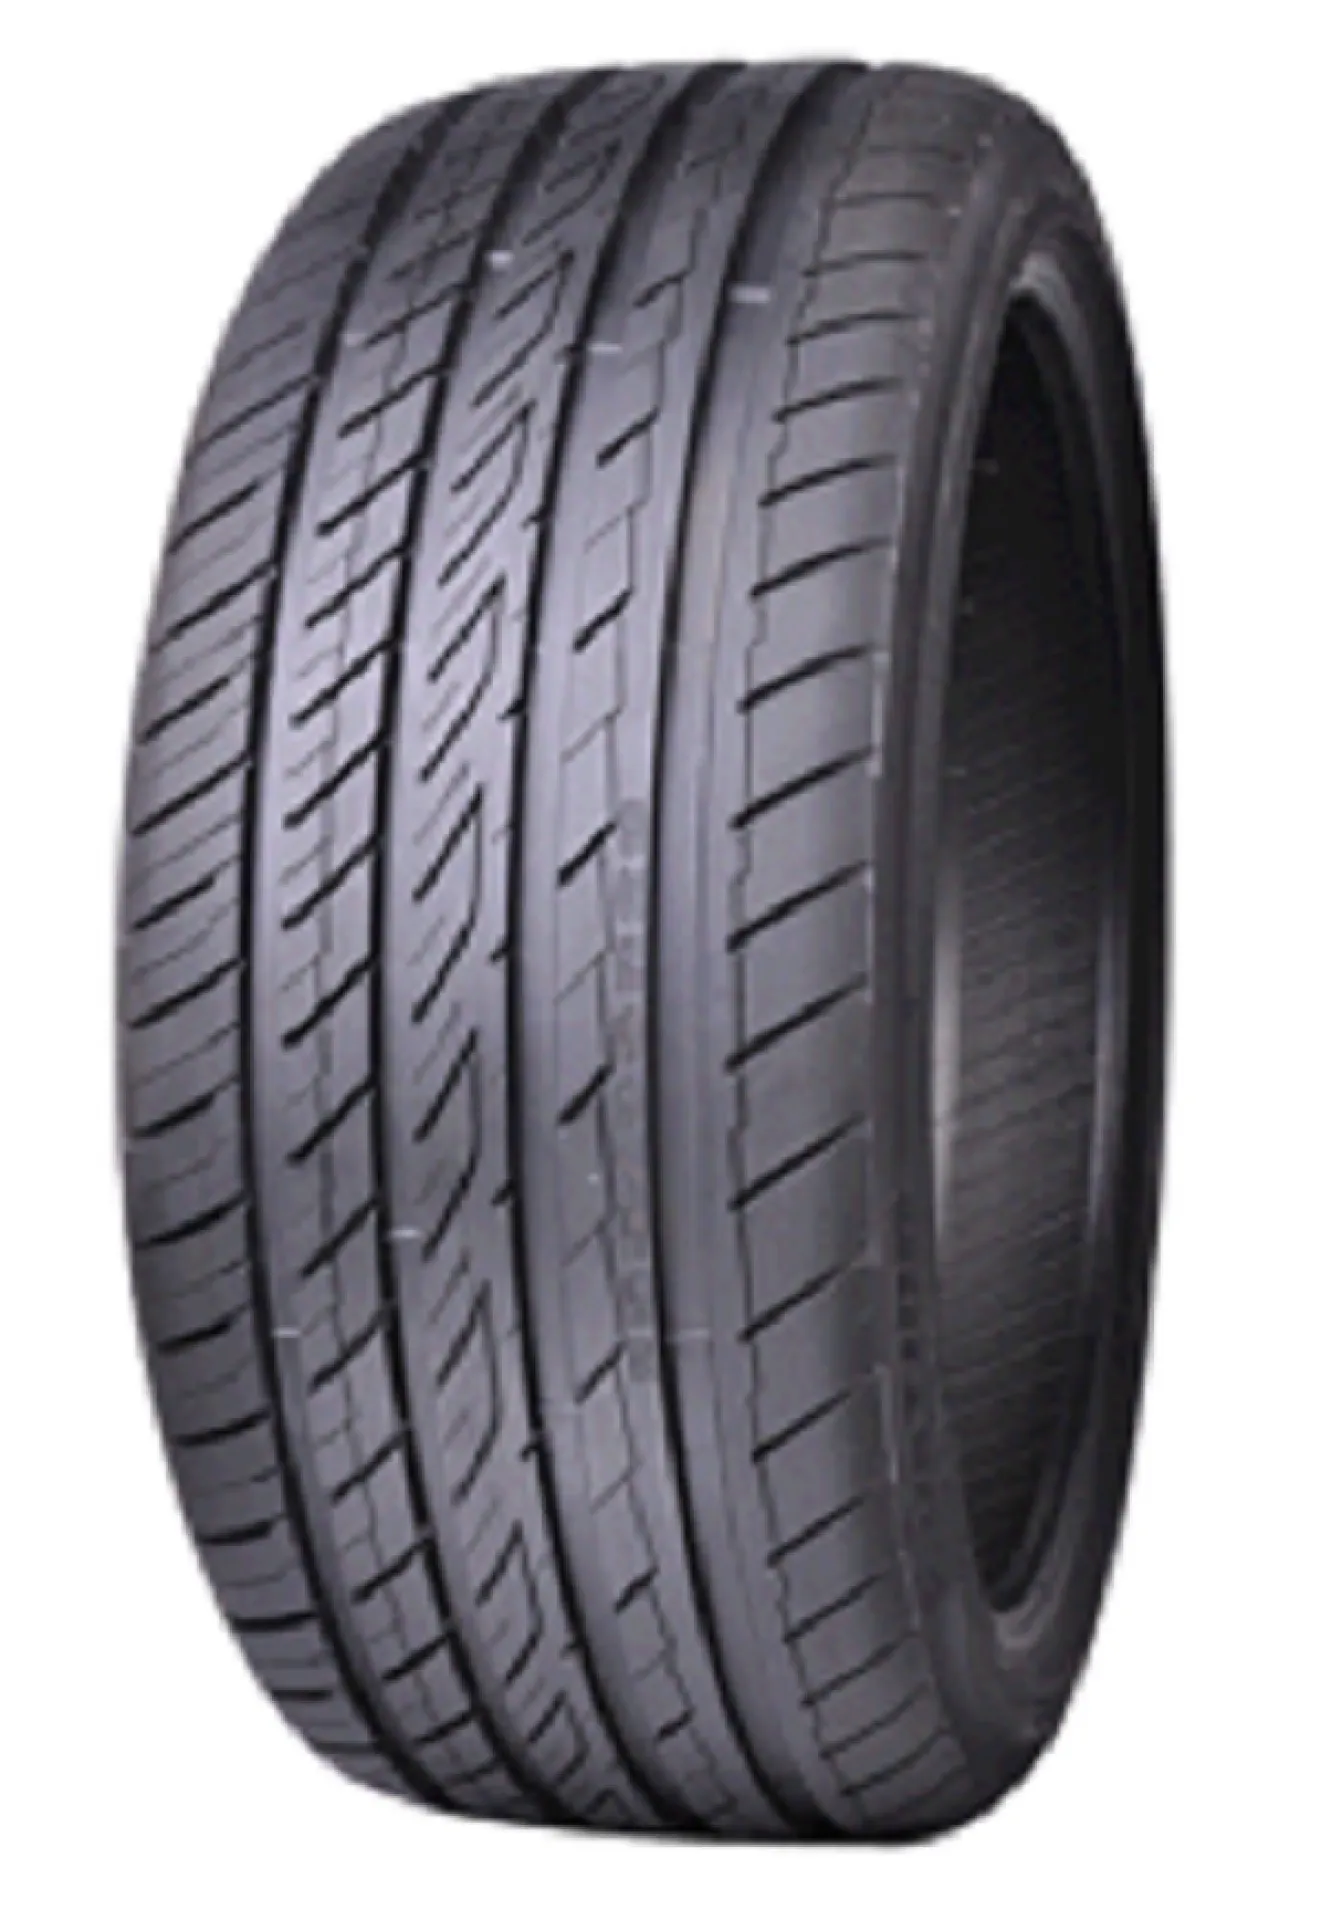 Ovation tyres vi 388 отзывы. Ovation Tyres vi-388. Ovation vi-388 225/55 r17. Ovation vi-388 225/50 r17. Ovation Tyres vi-388 225/55 r17.